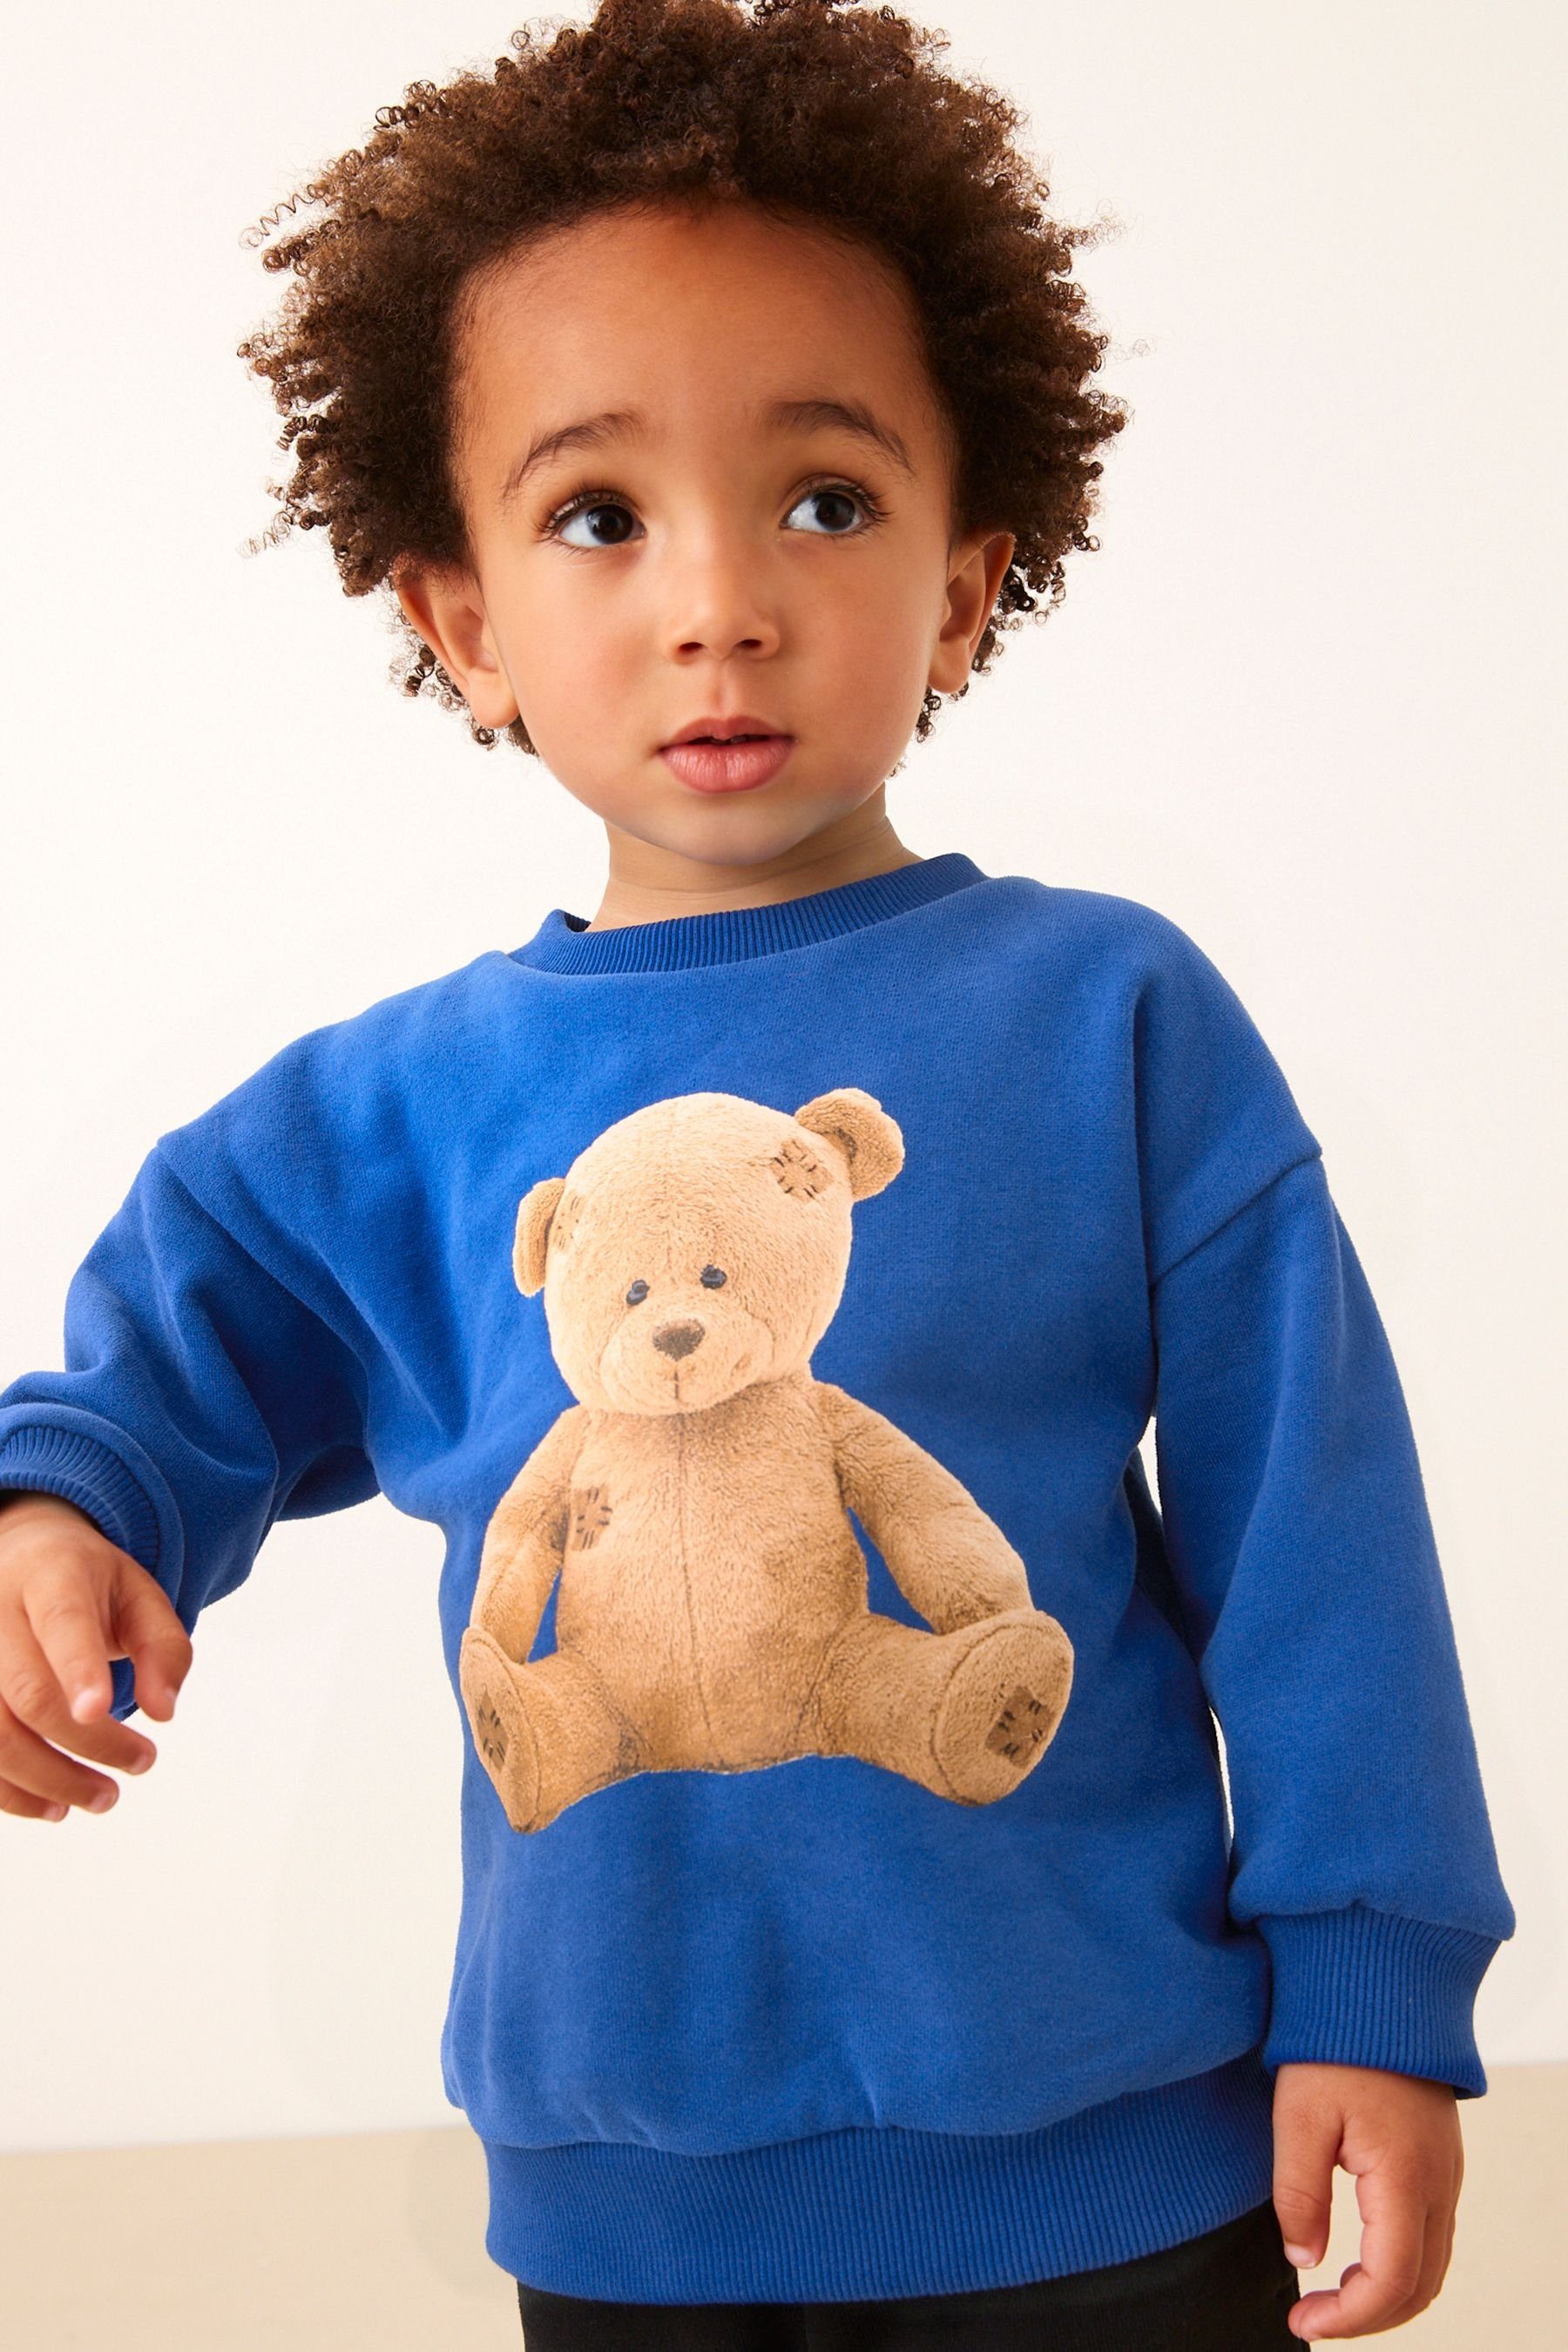 Next Sweatanzug Sweatshirt (2-tlg) mit Jogginghose Motiv Blue Set Bear im und